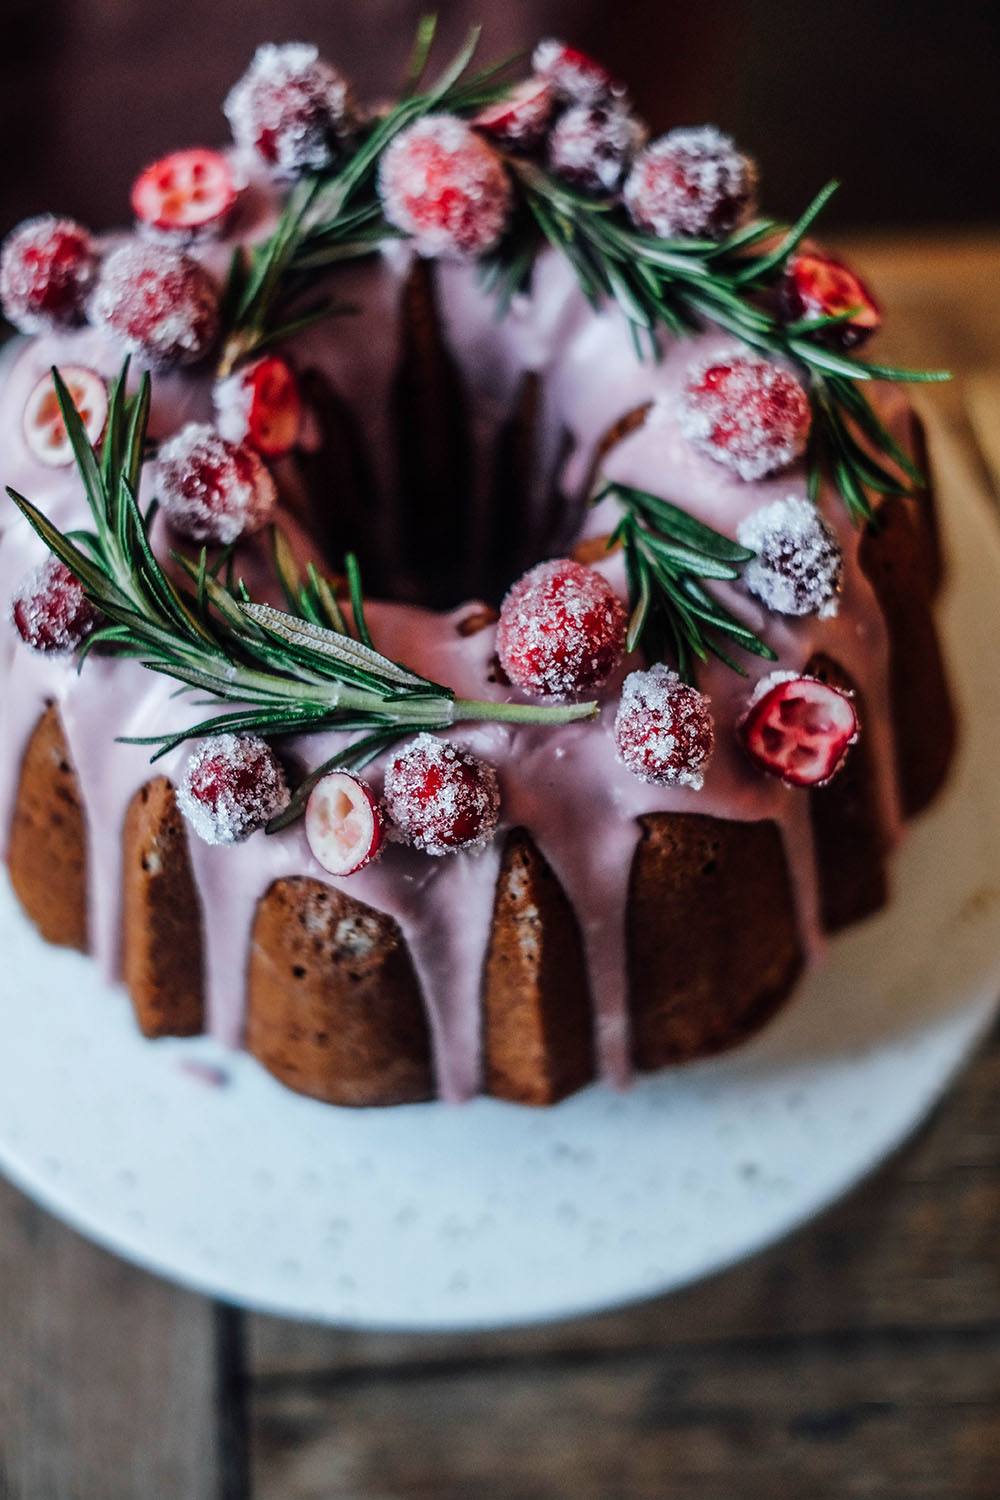 Gluten-free Cranberry-Christmas Bundt Cake